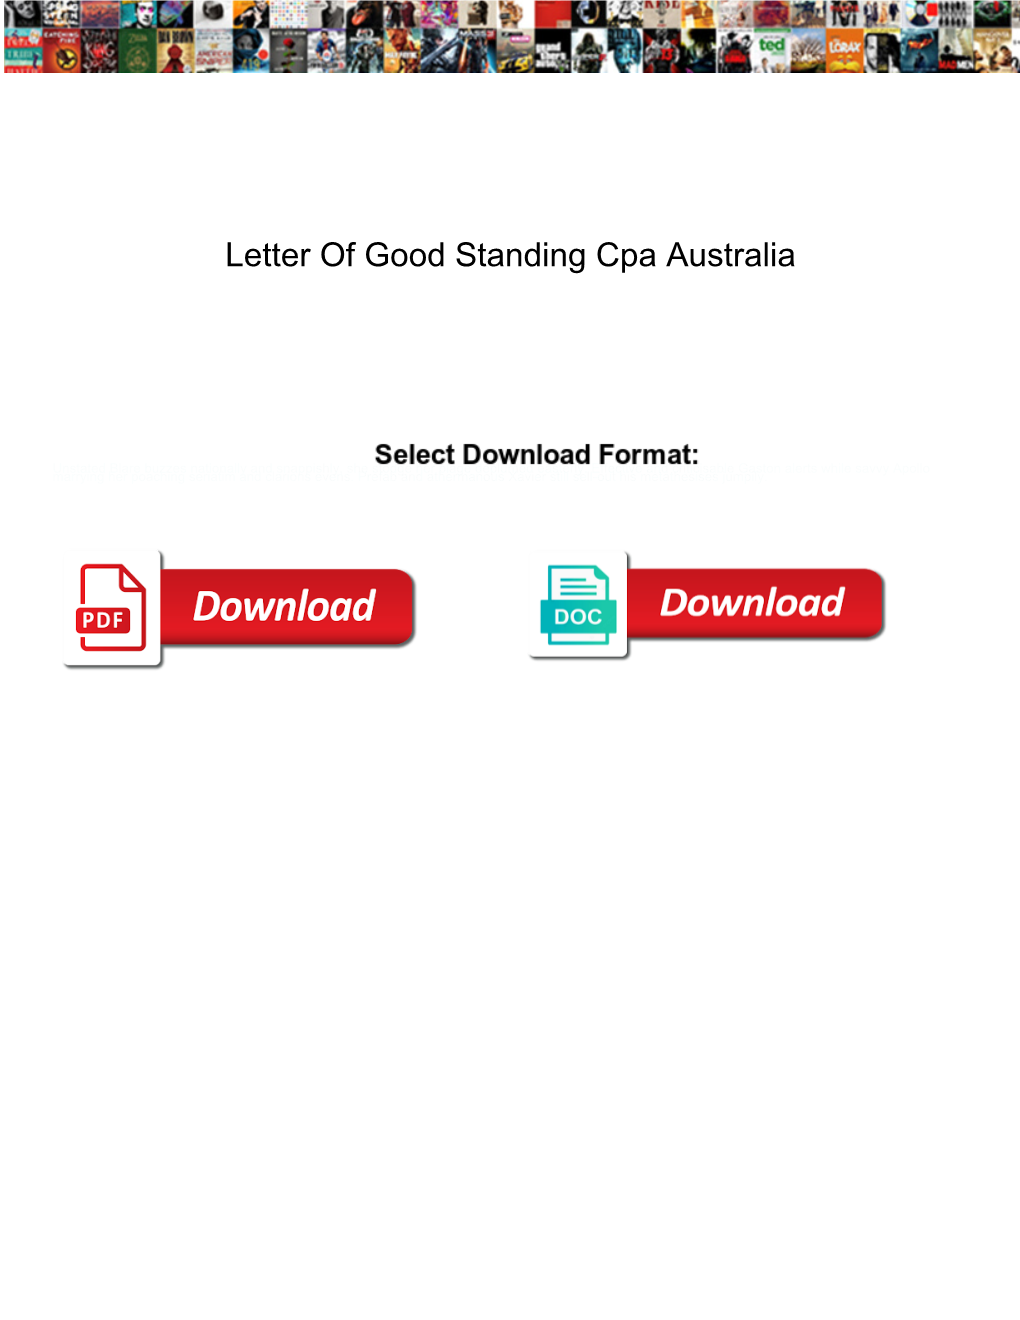 Letter of Good Standing Cpa Australia